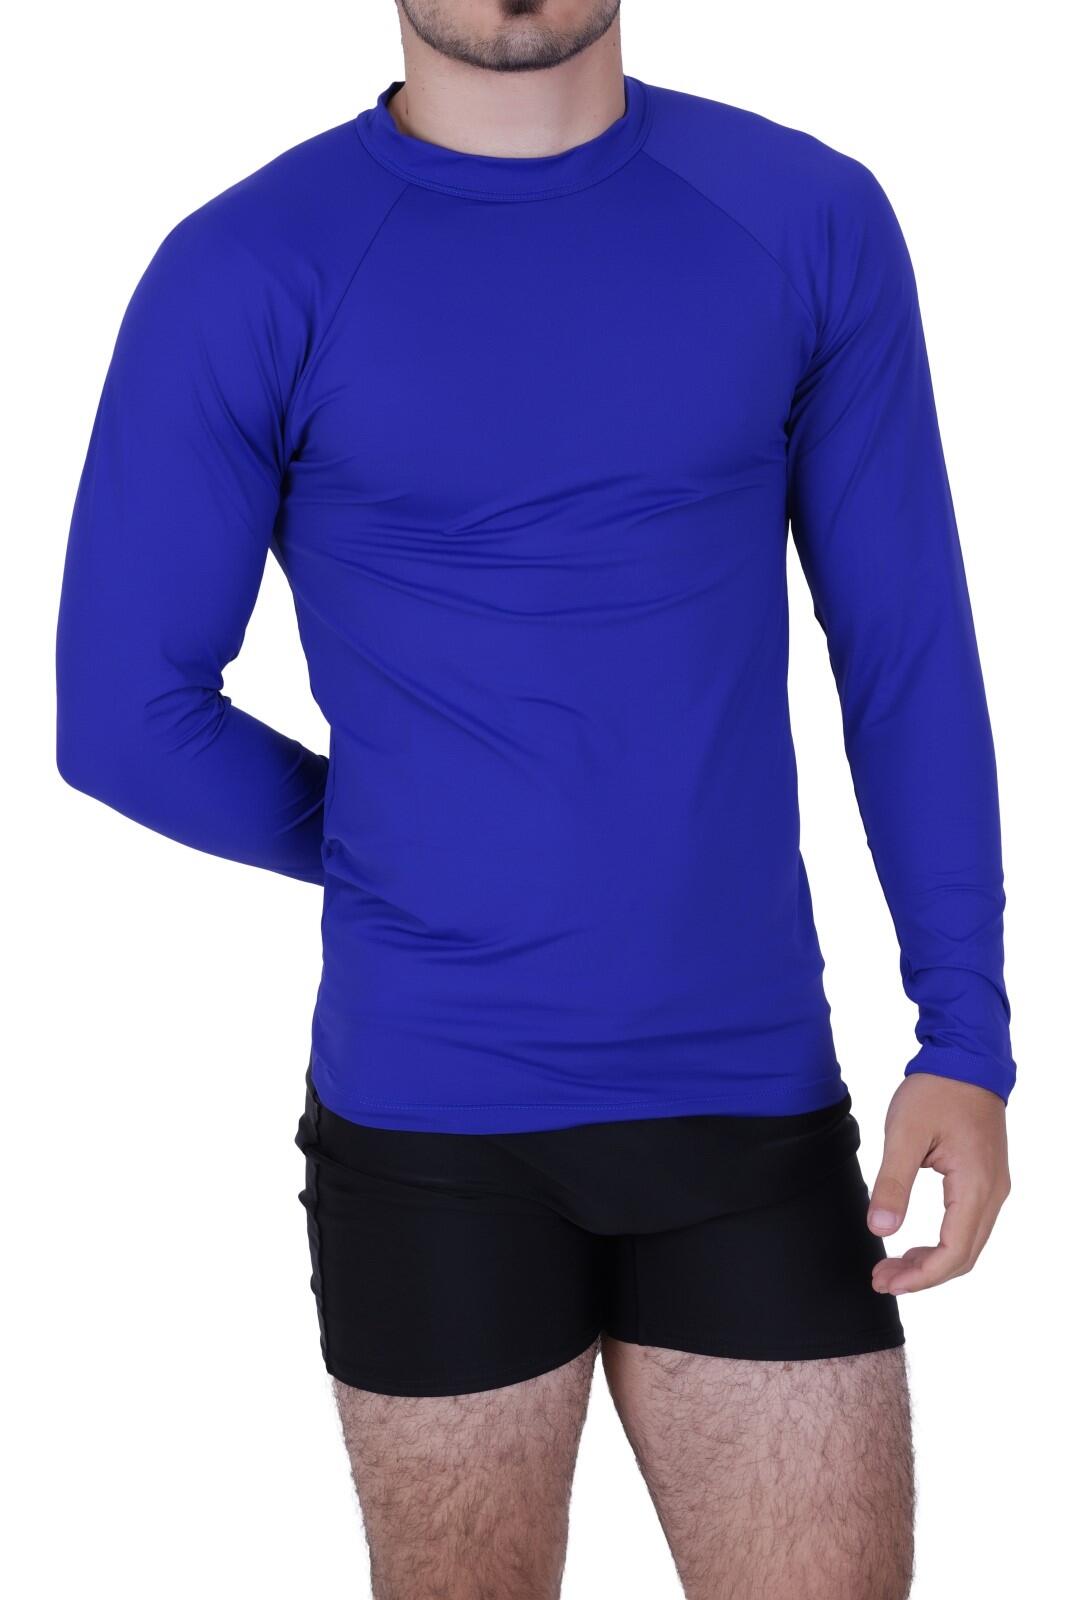 Camisa Masculina Segunda Pele Térmica com Proteção Solar – Vopen